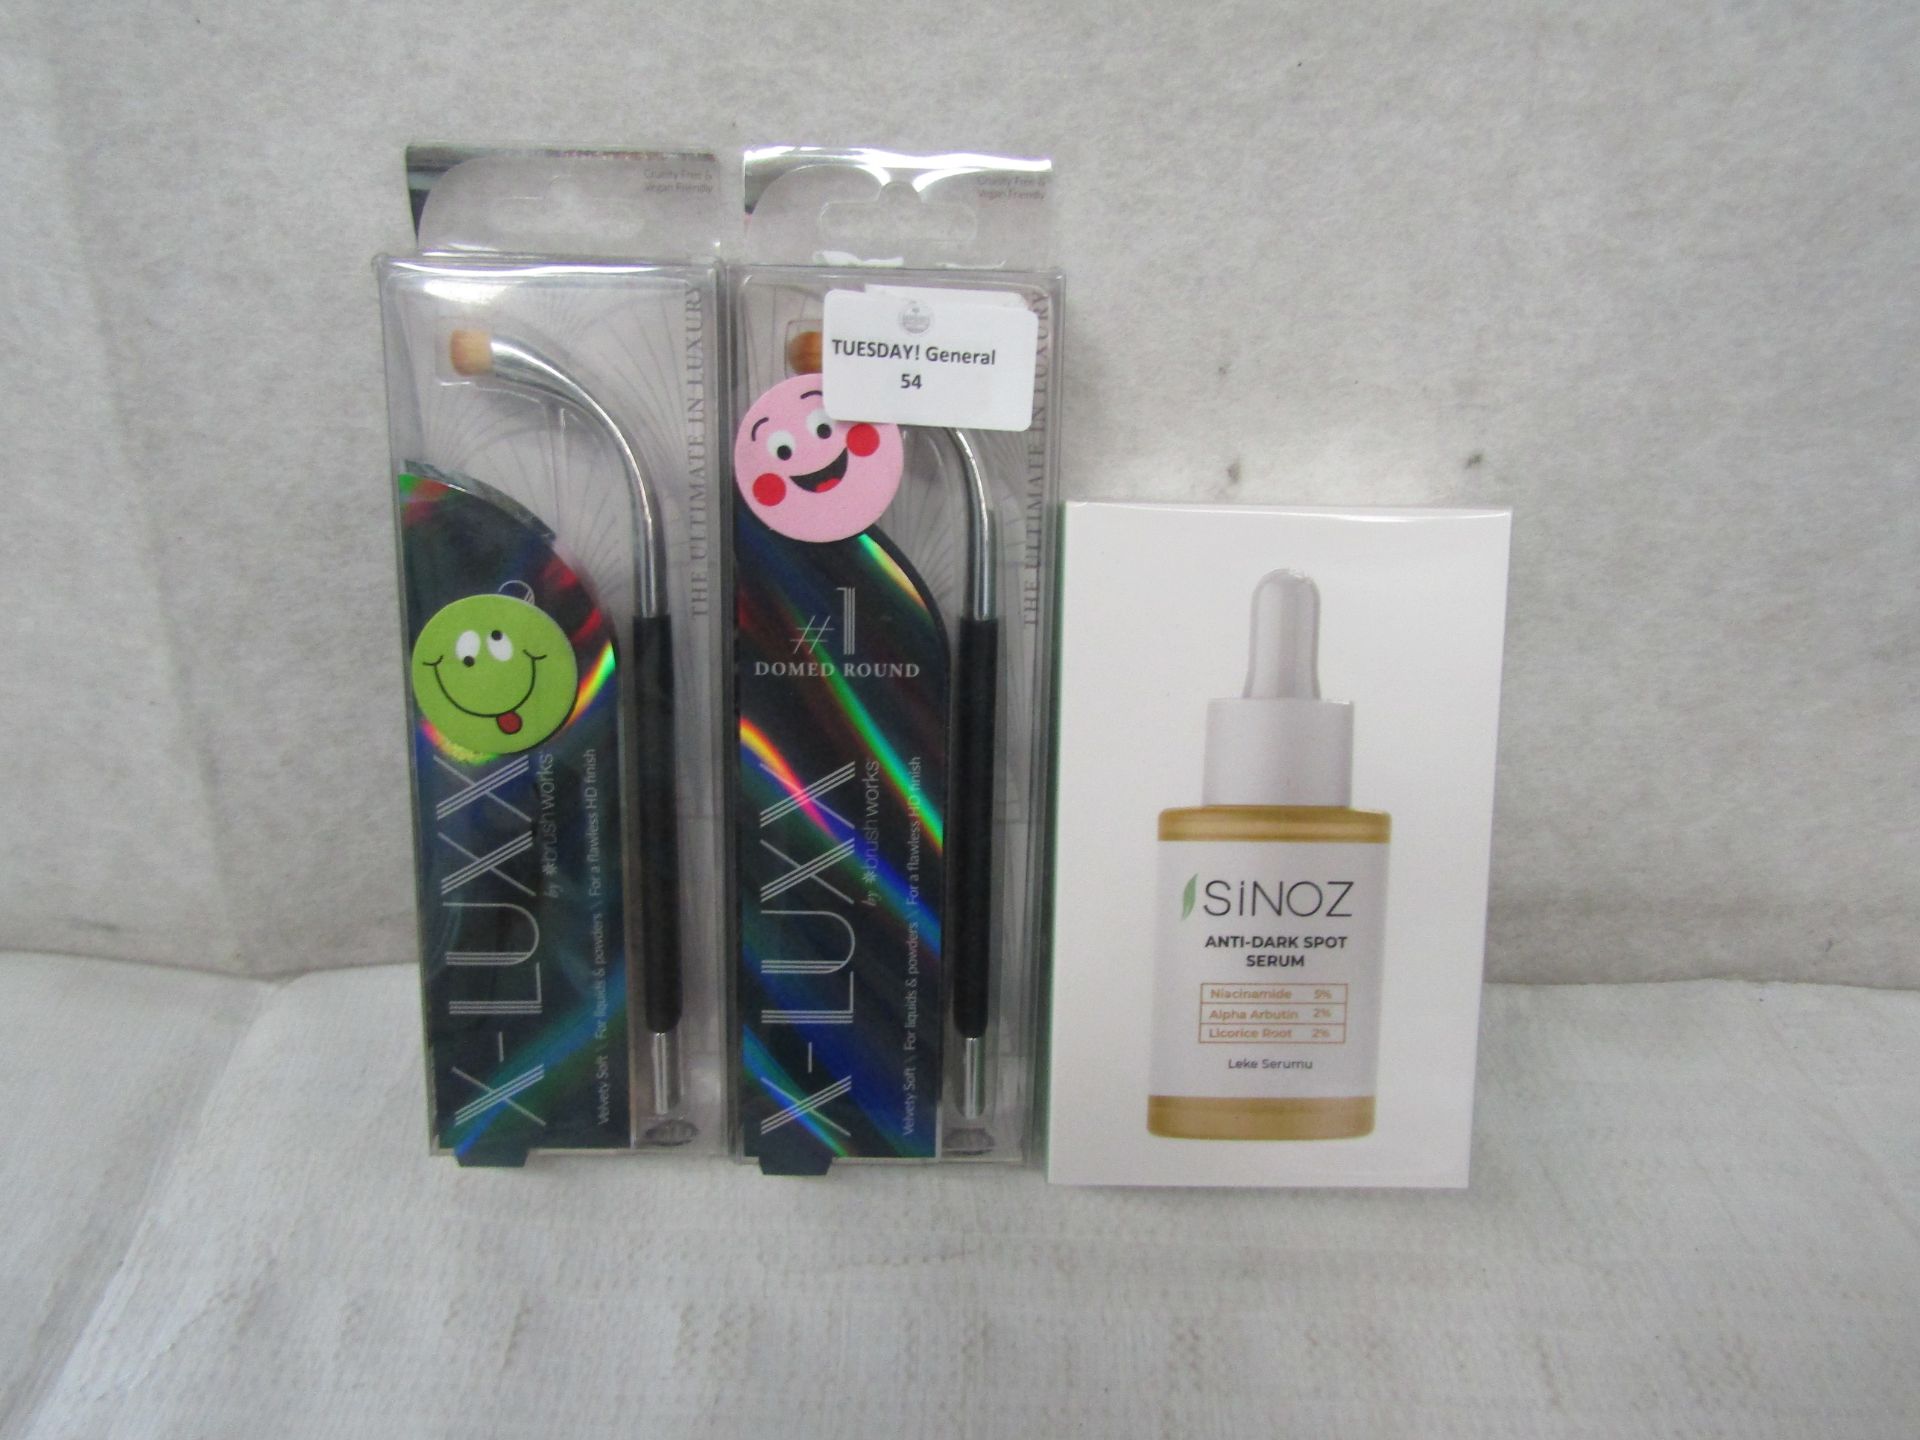 2x X-Luxx - Domed Round Makeup Brushes - Packaged. 1X Sinoz - Anti-Dark Spot Serum 30ml - Packaged.